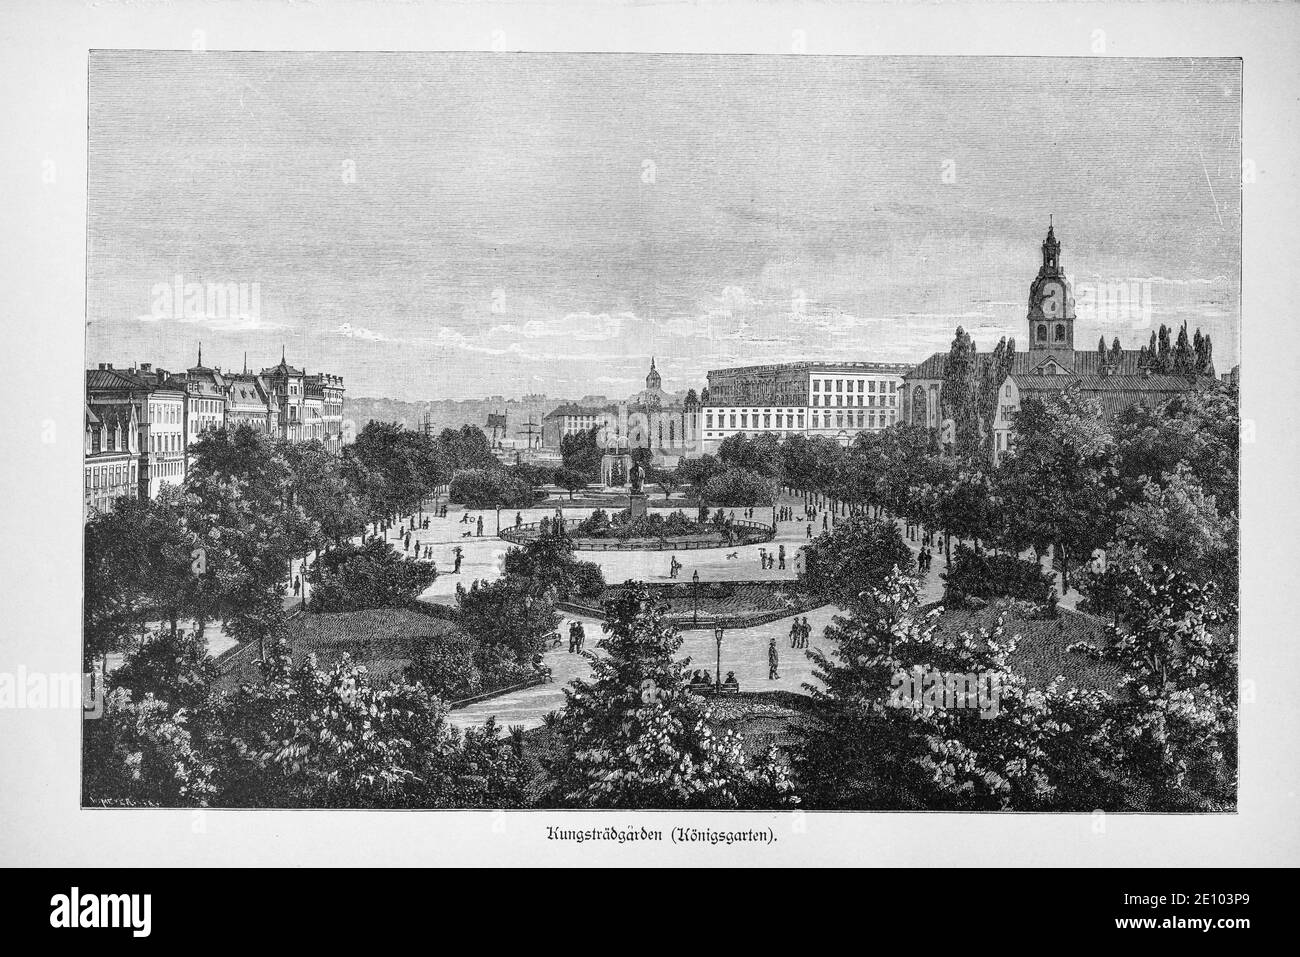 Vista de Königsgarten o Royal King´s Garden, Copenhague, Dinamarca, ilustración tomada de 'Die Hauptstädte der Welt', Breslau alrededor de 1987 Foto de stock